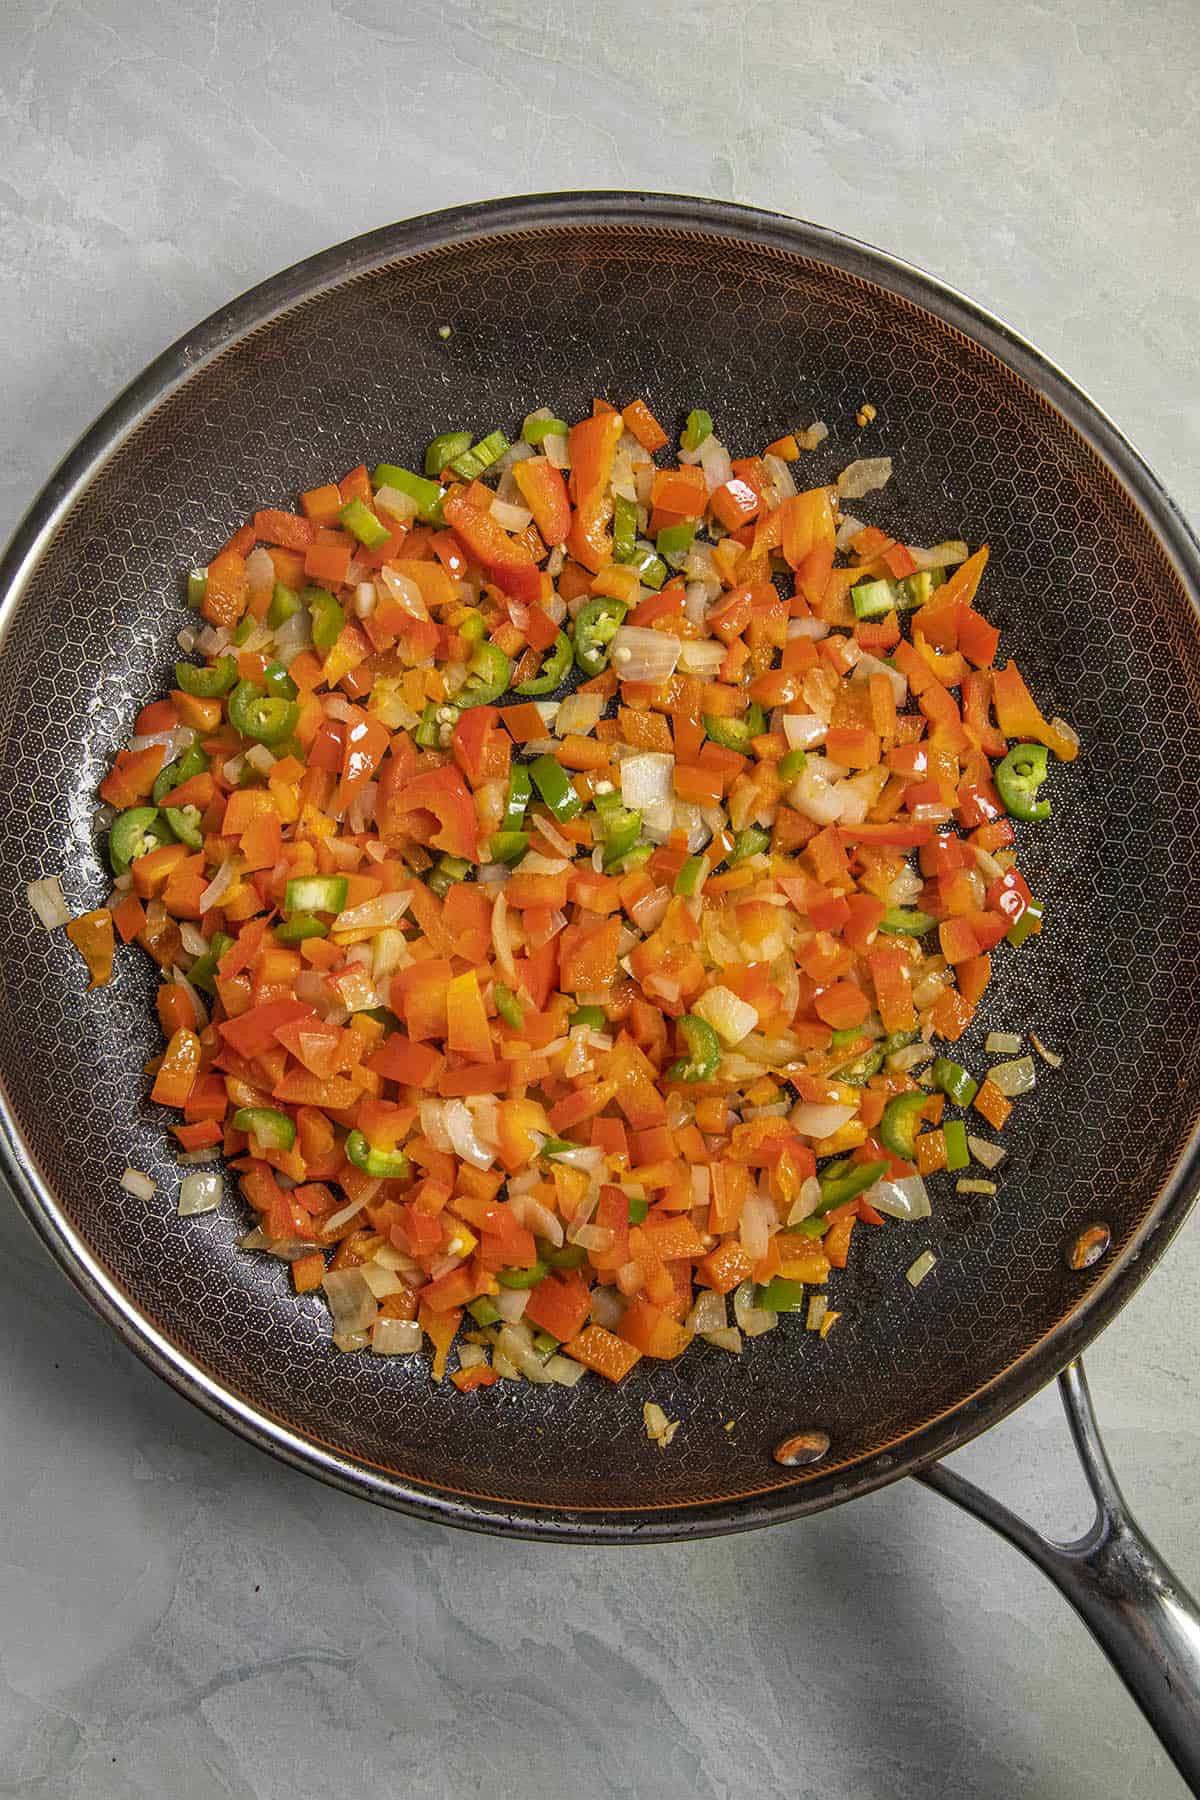 Cooking vegetables in a pan to make Shakshuka